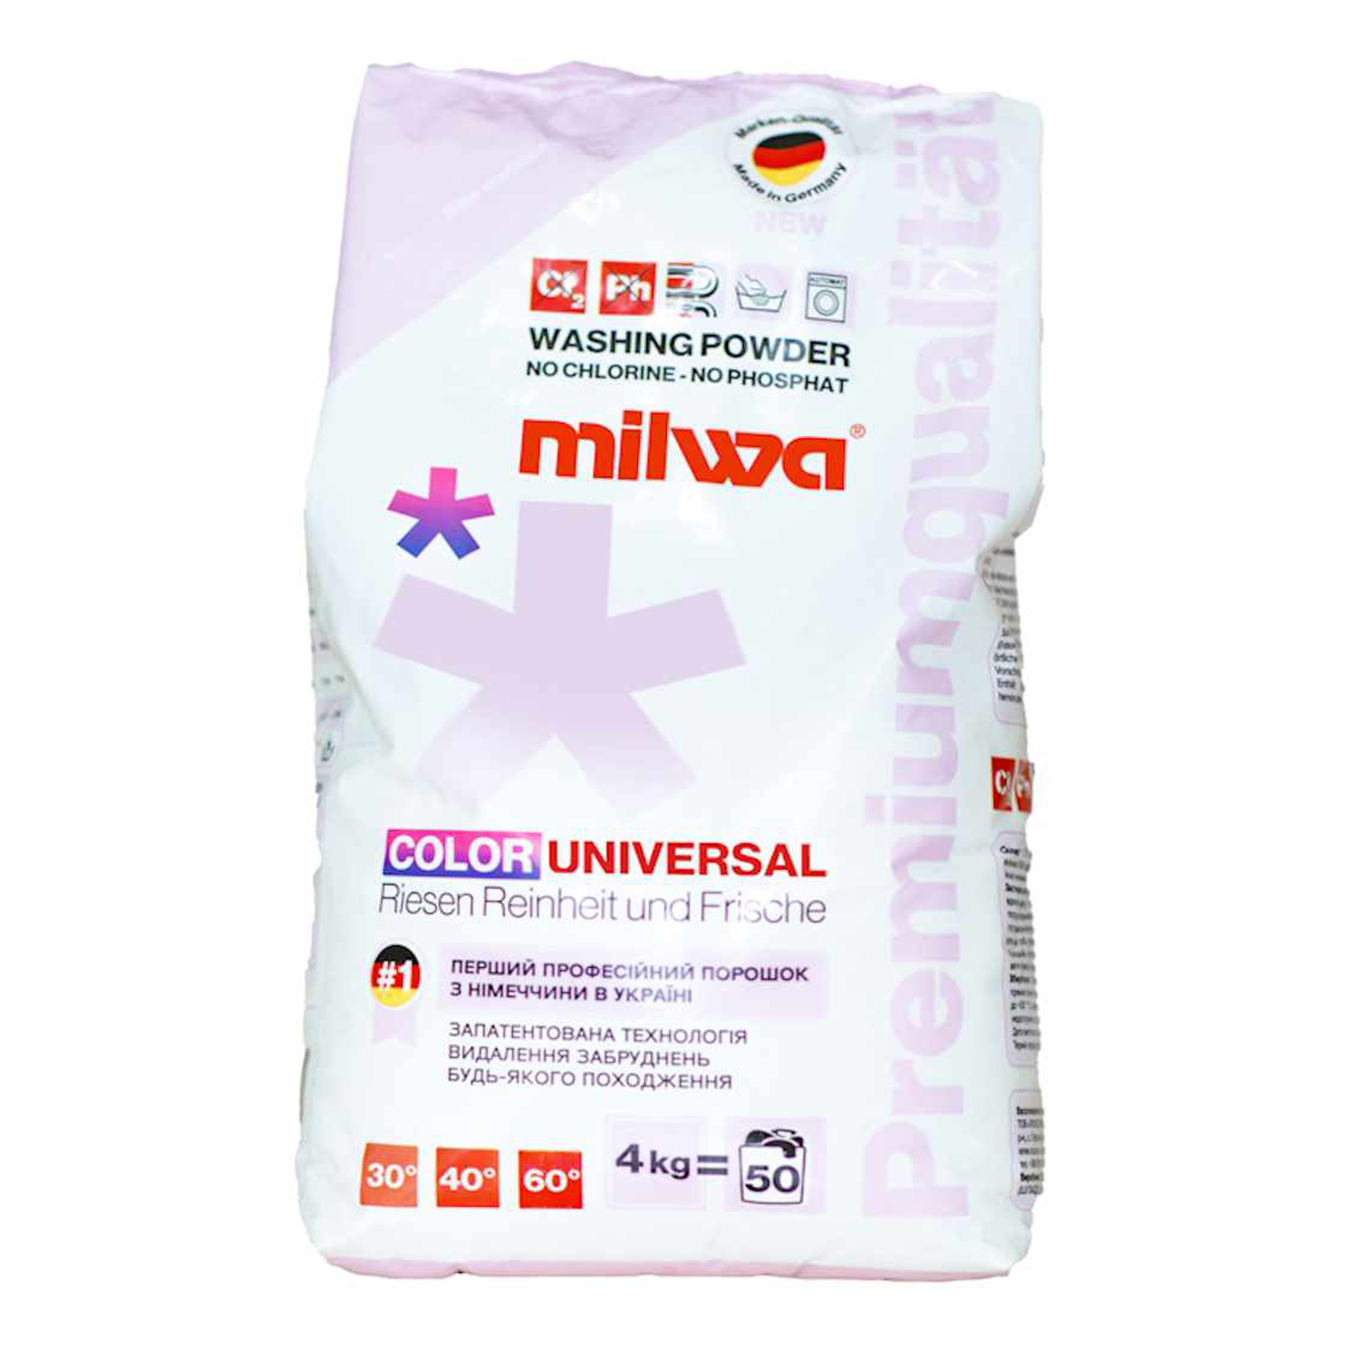 Powder Milwa Color Universal for washing 4 kg